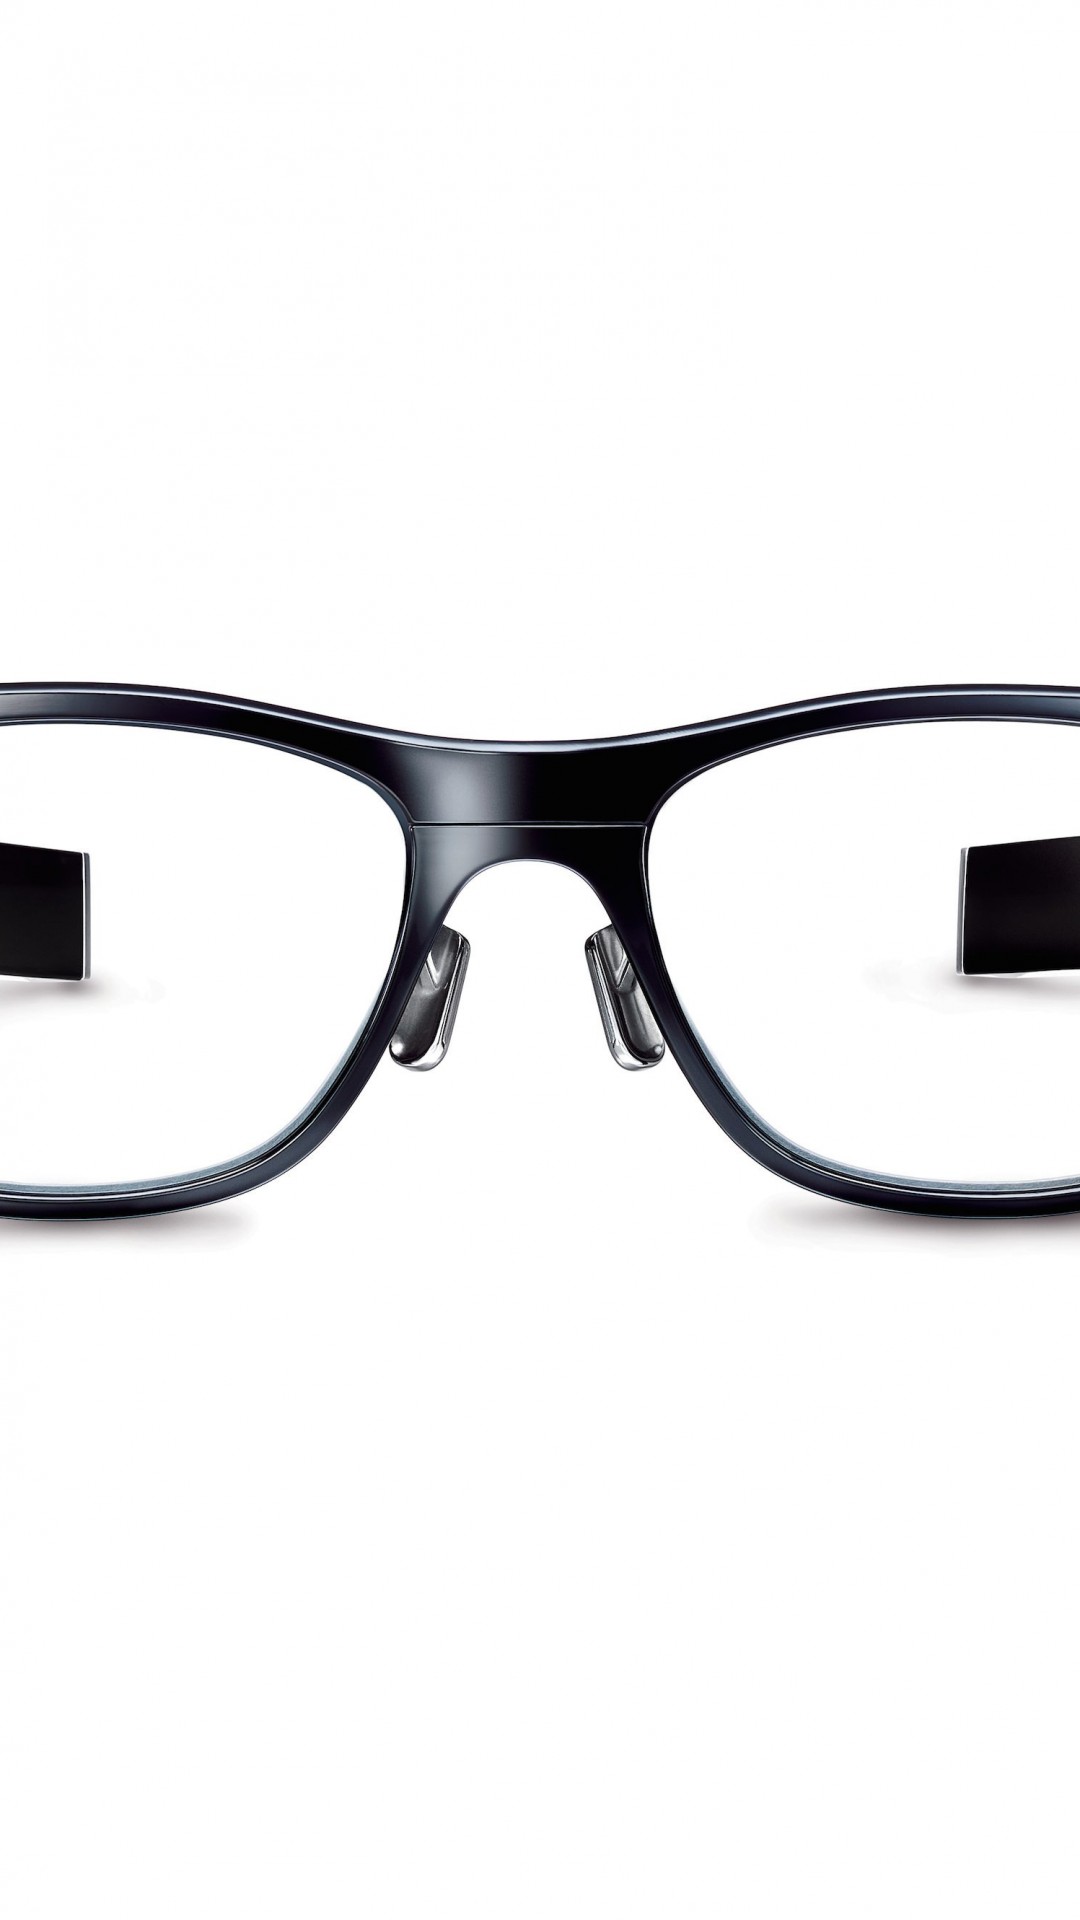 Jins Meme Smart Glasses Wallpaper for SAMSUNG Galaxy S5